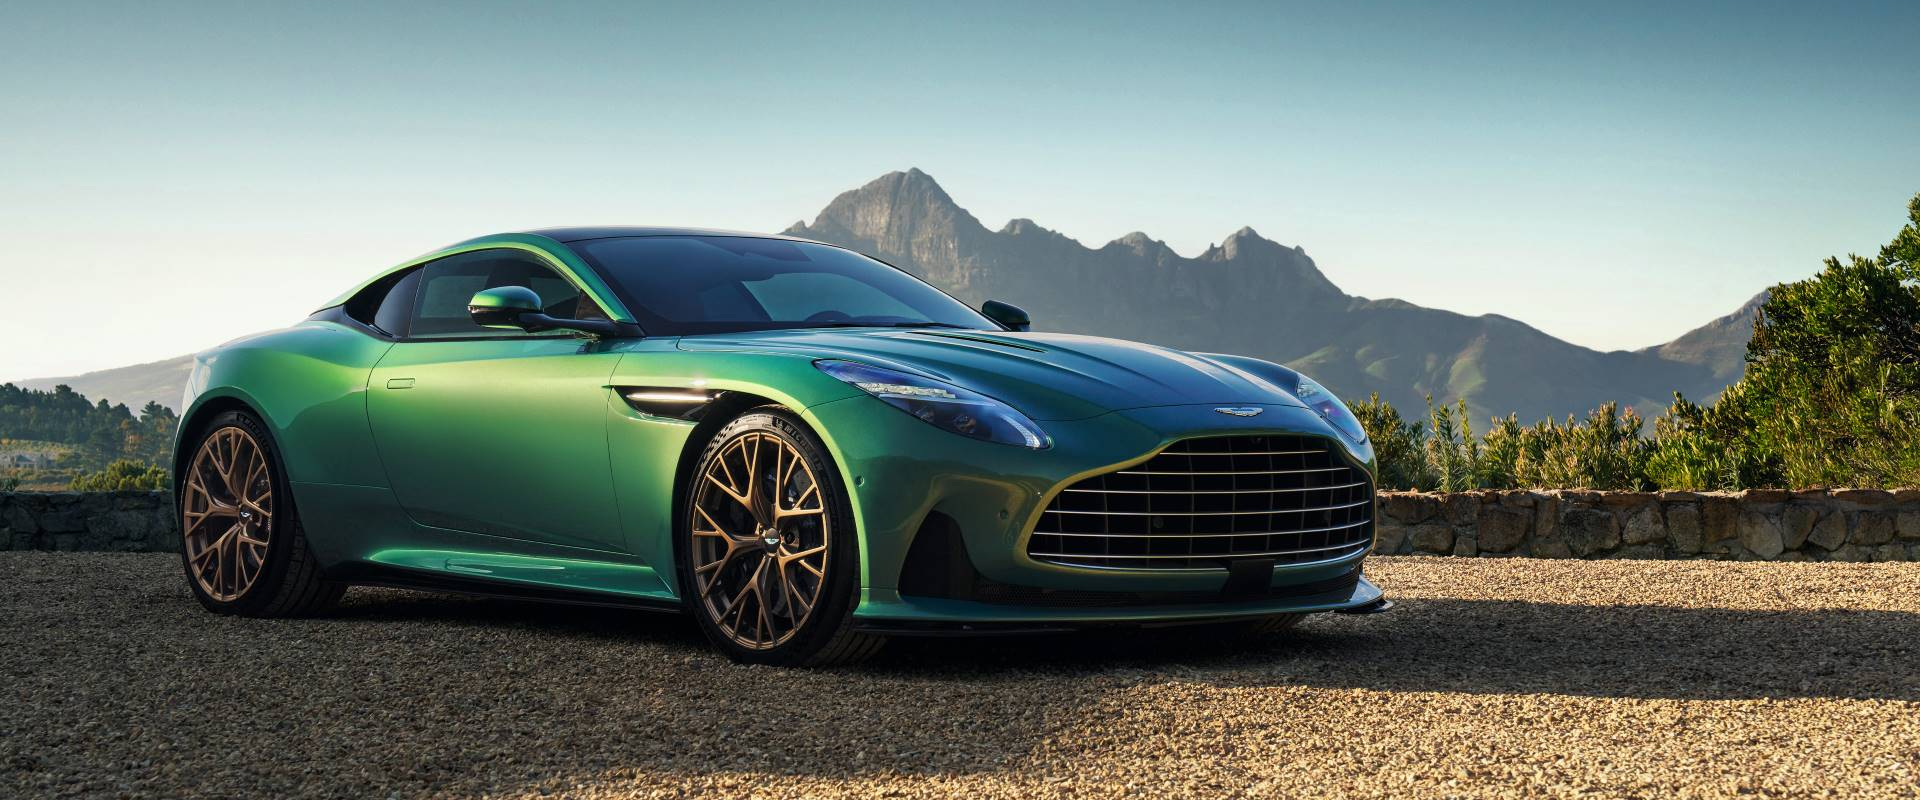 Aston Martin Debuts DB12 "Super Tourer" 7